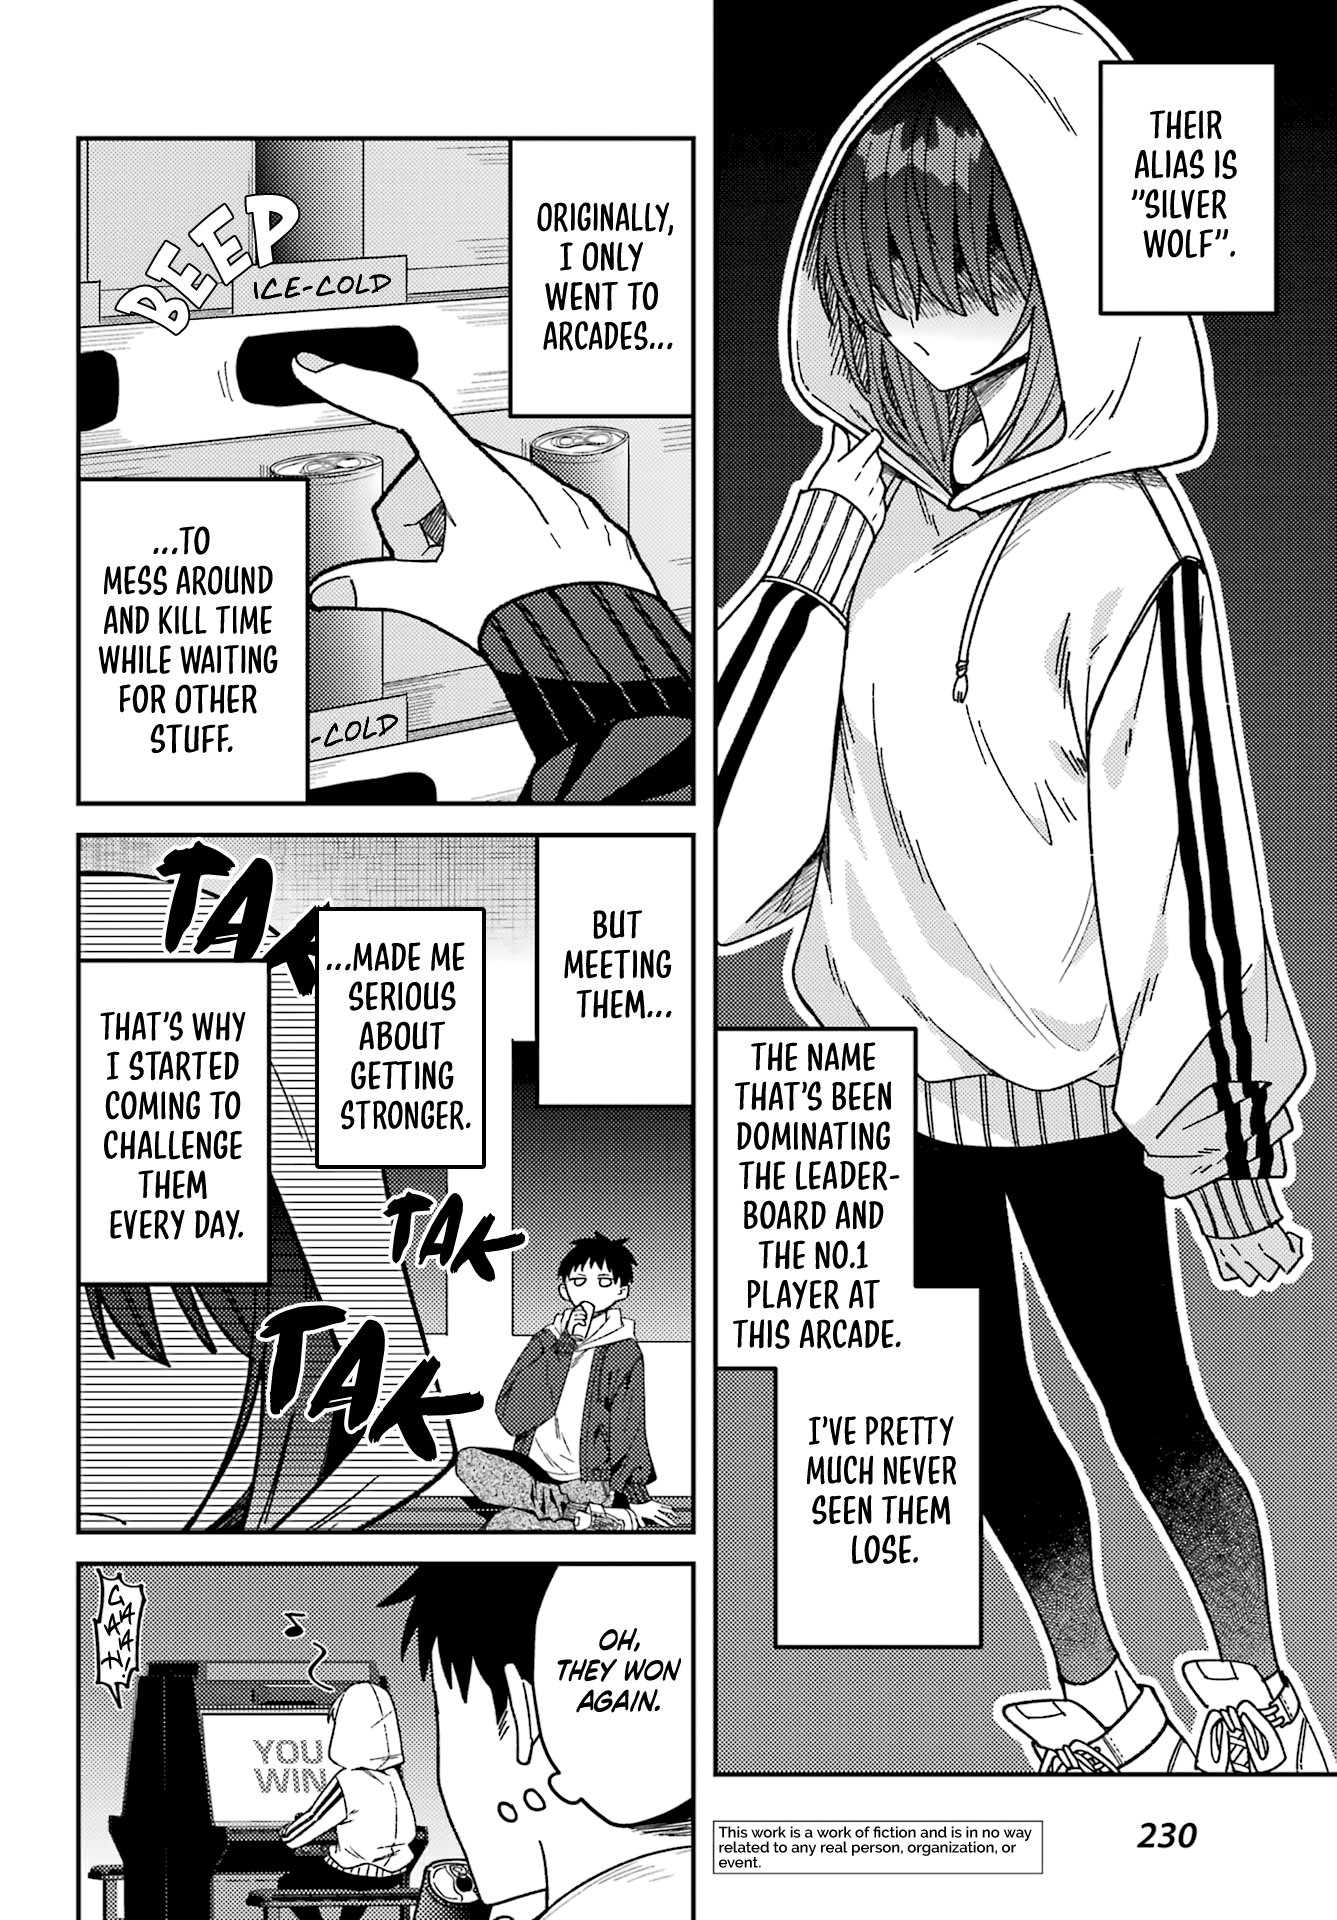 Unparalleled Mememori-Kun - Page 2